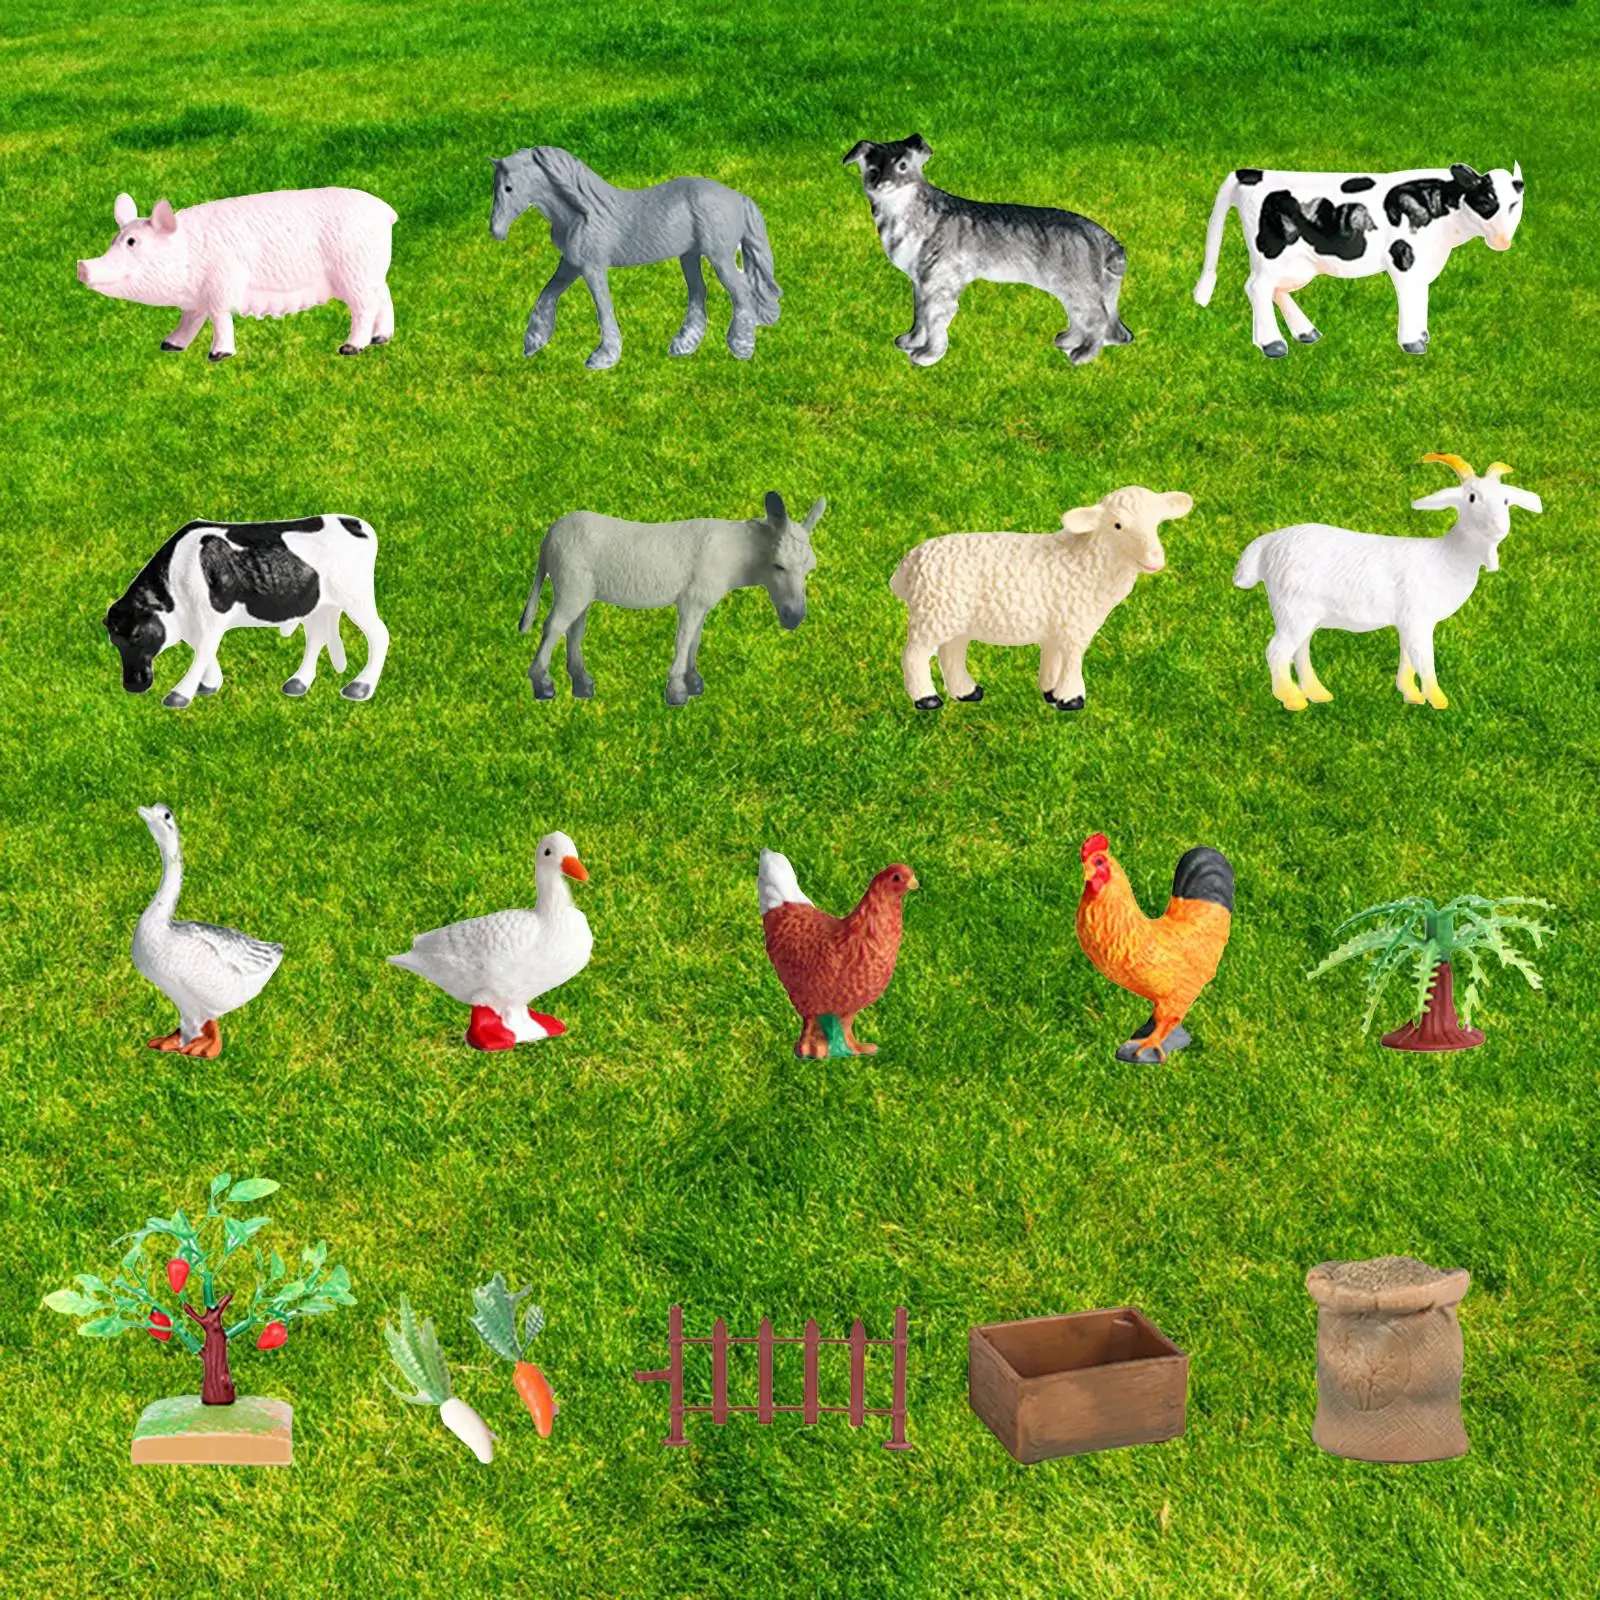 12x Miniature Farm Animals Model Animal Figurines Garden DIY Kit for Decor